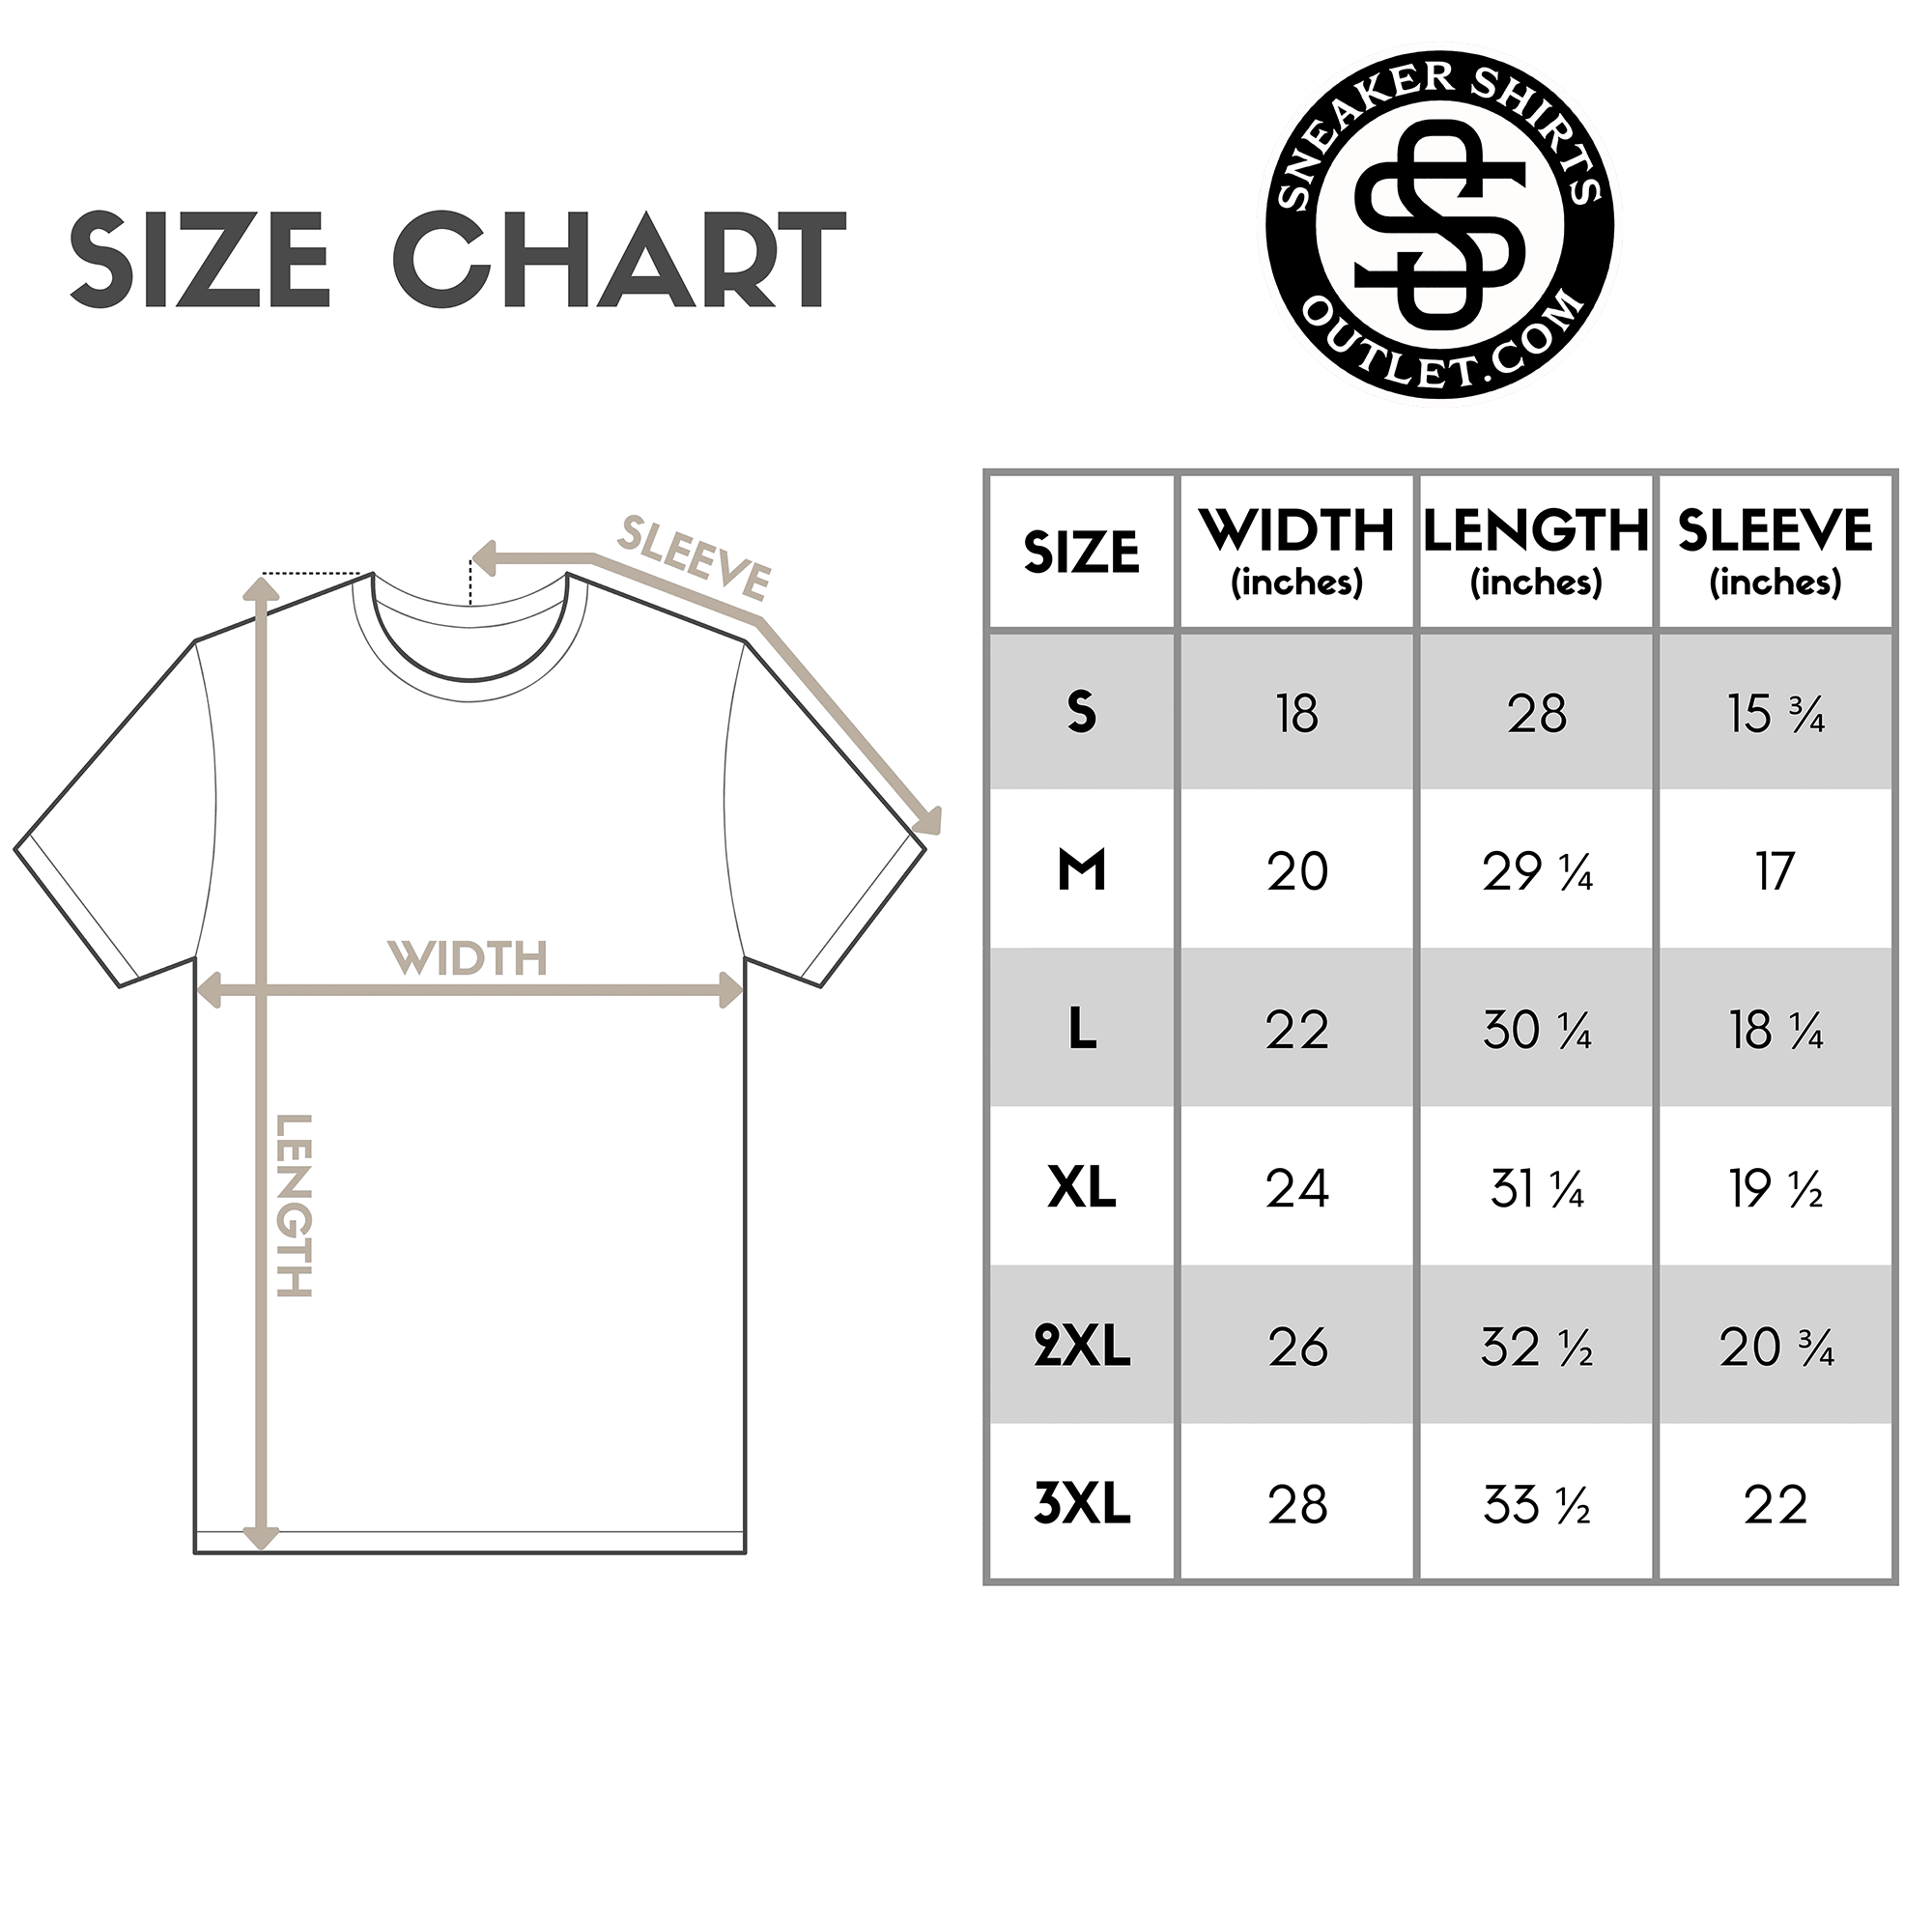 Money Talk Shirt size chart photo